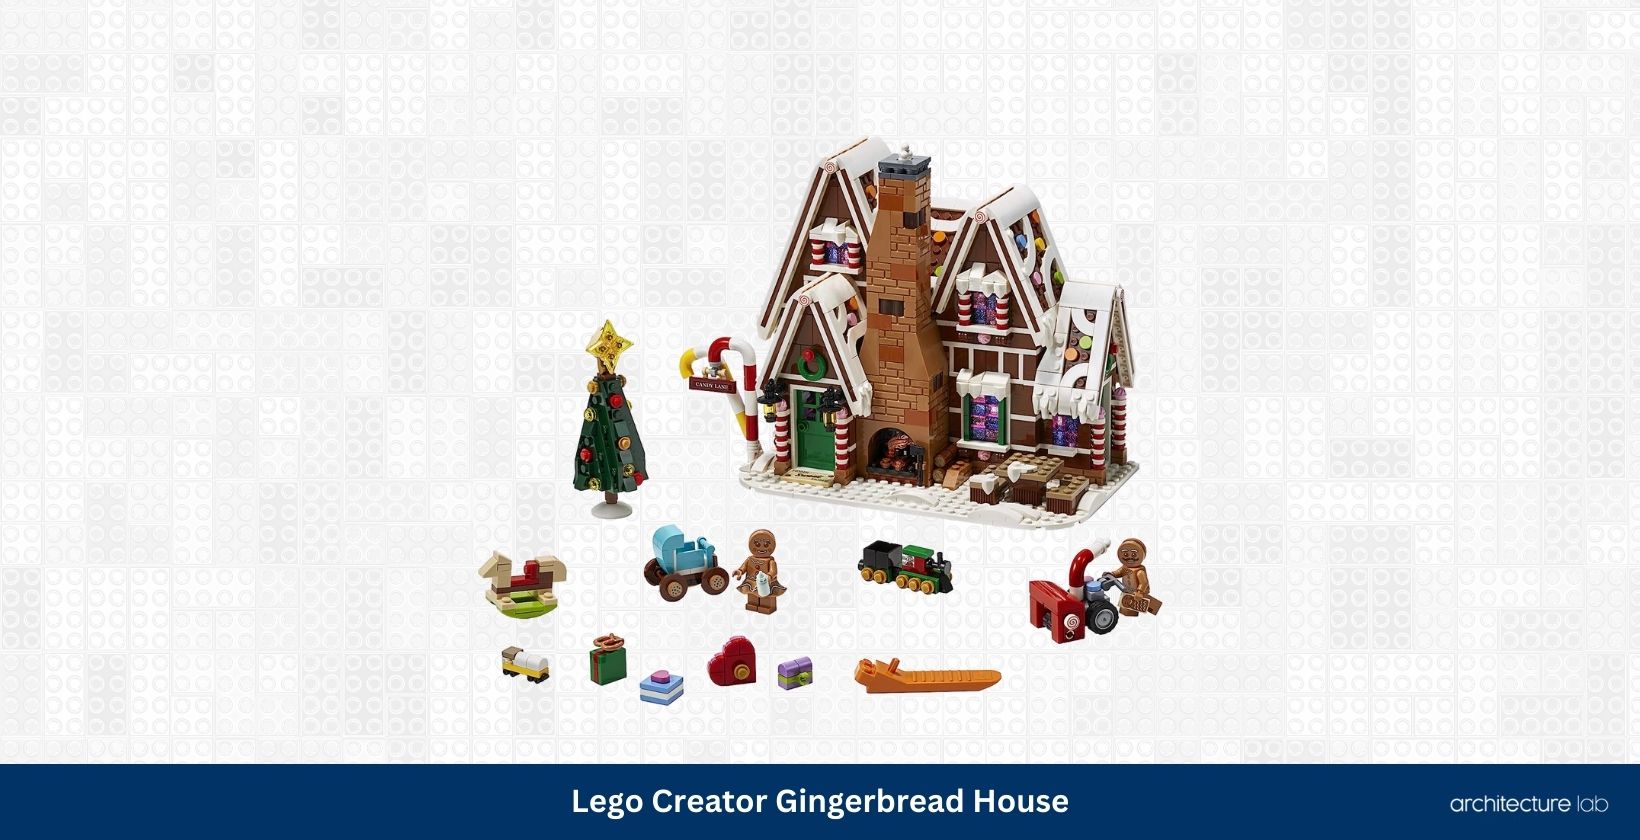 Lego creator gingerbread